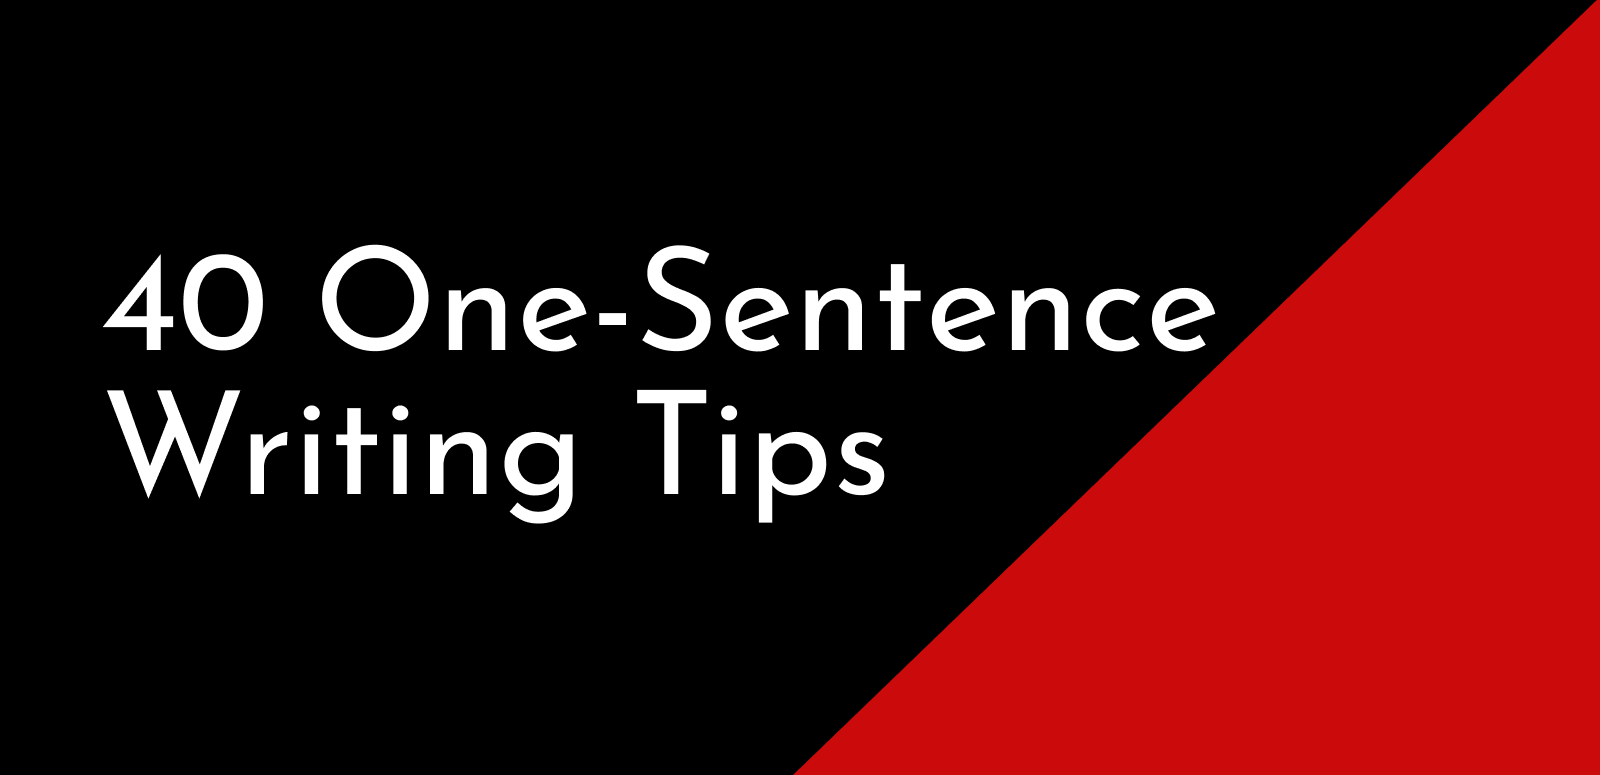 40 One-Sentence Writing Tips